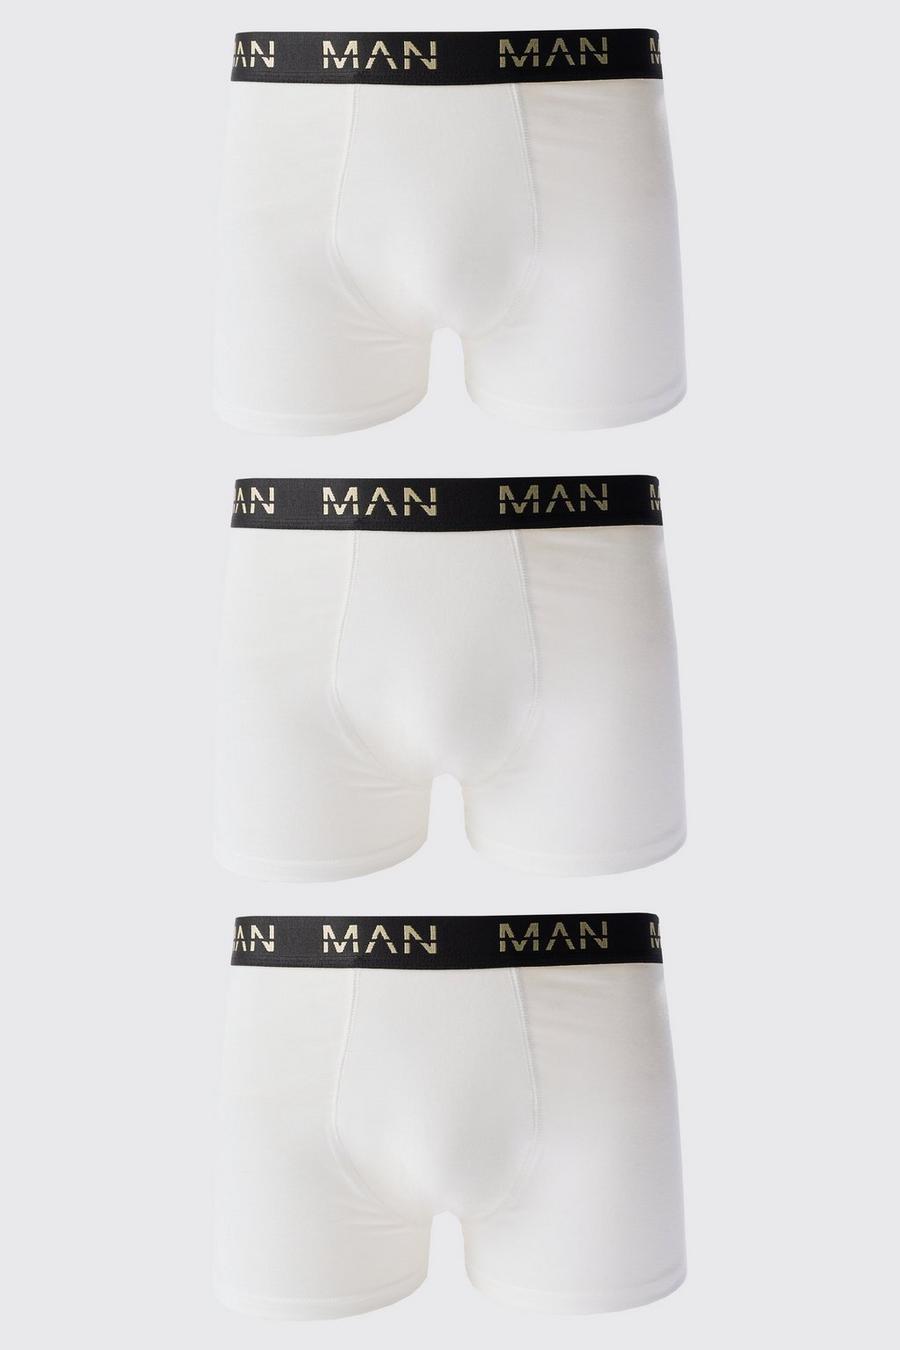 Boxer Man Dash color oro bianchi - set di 3 paia, White